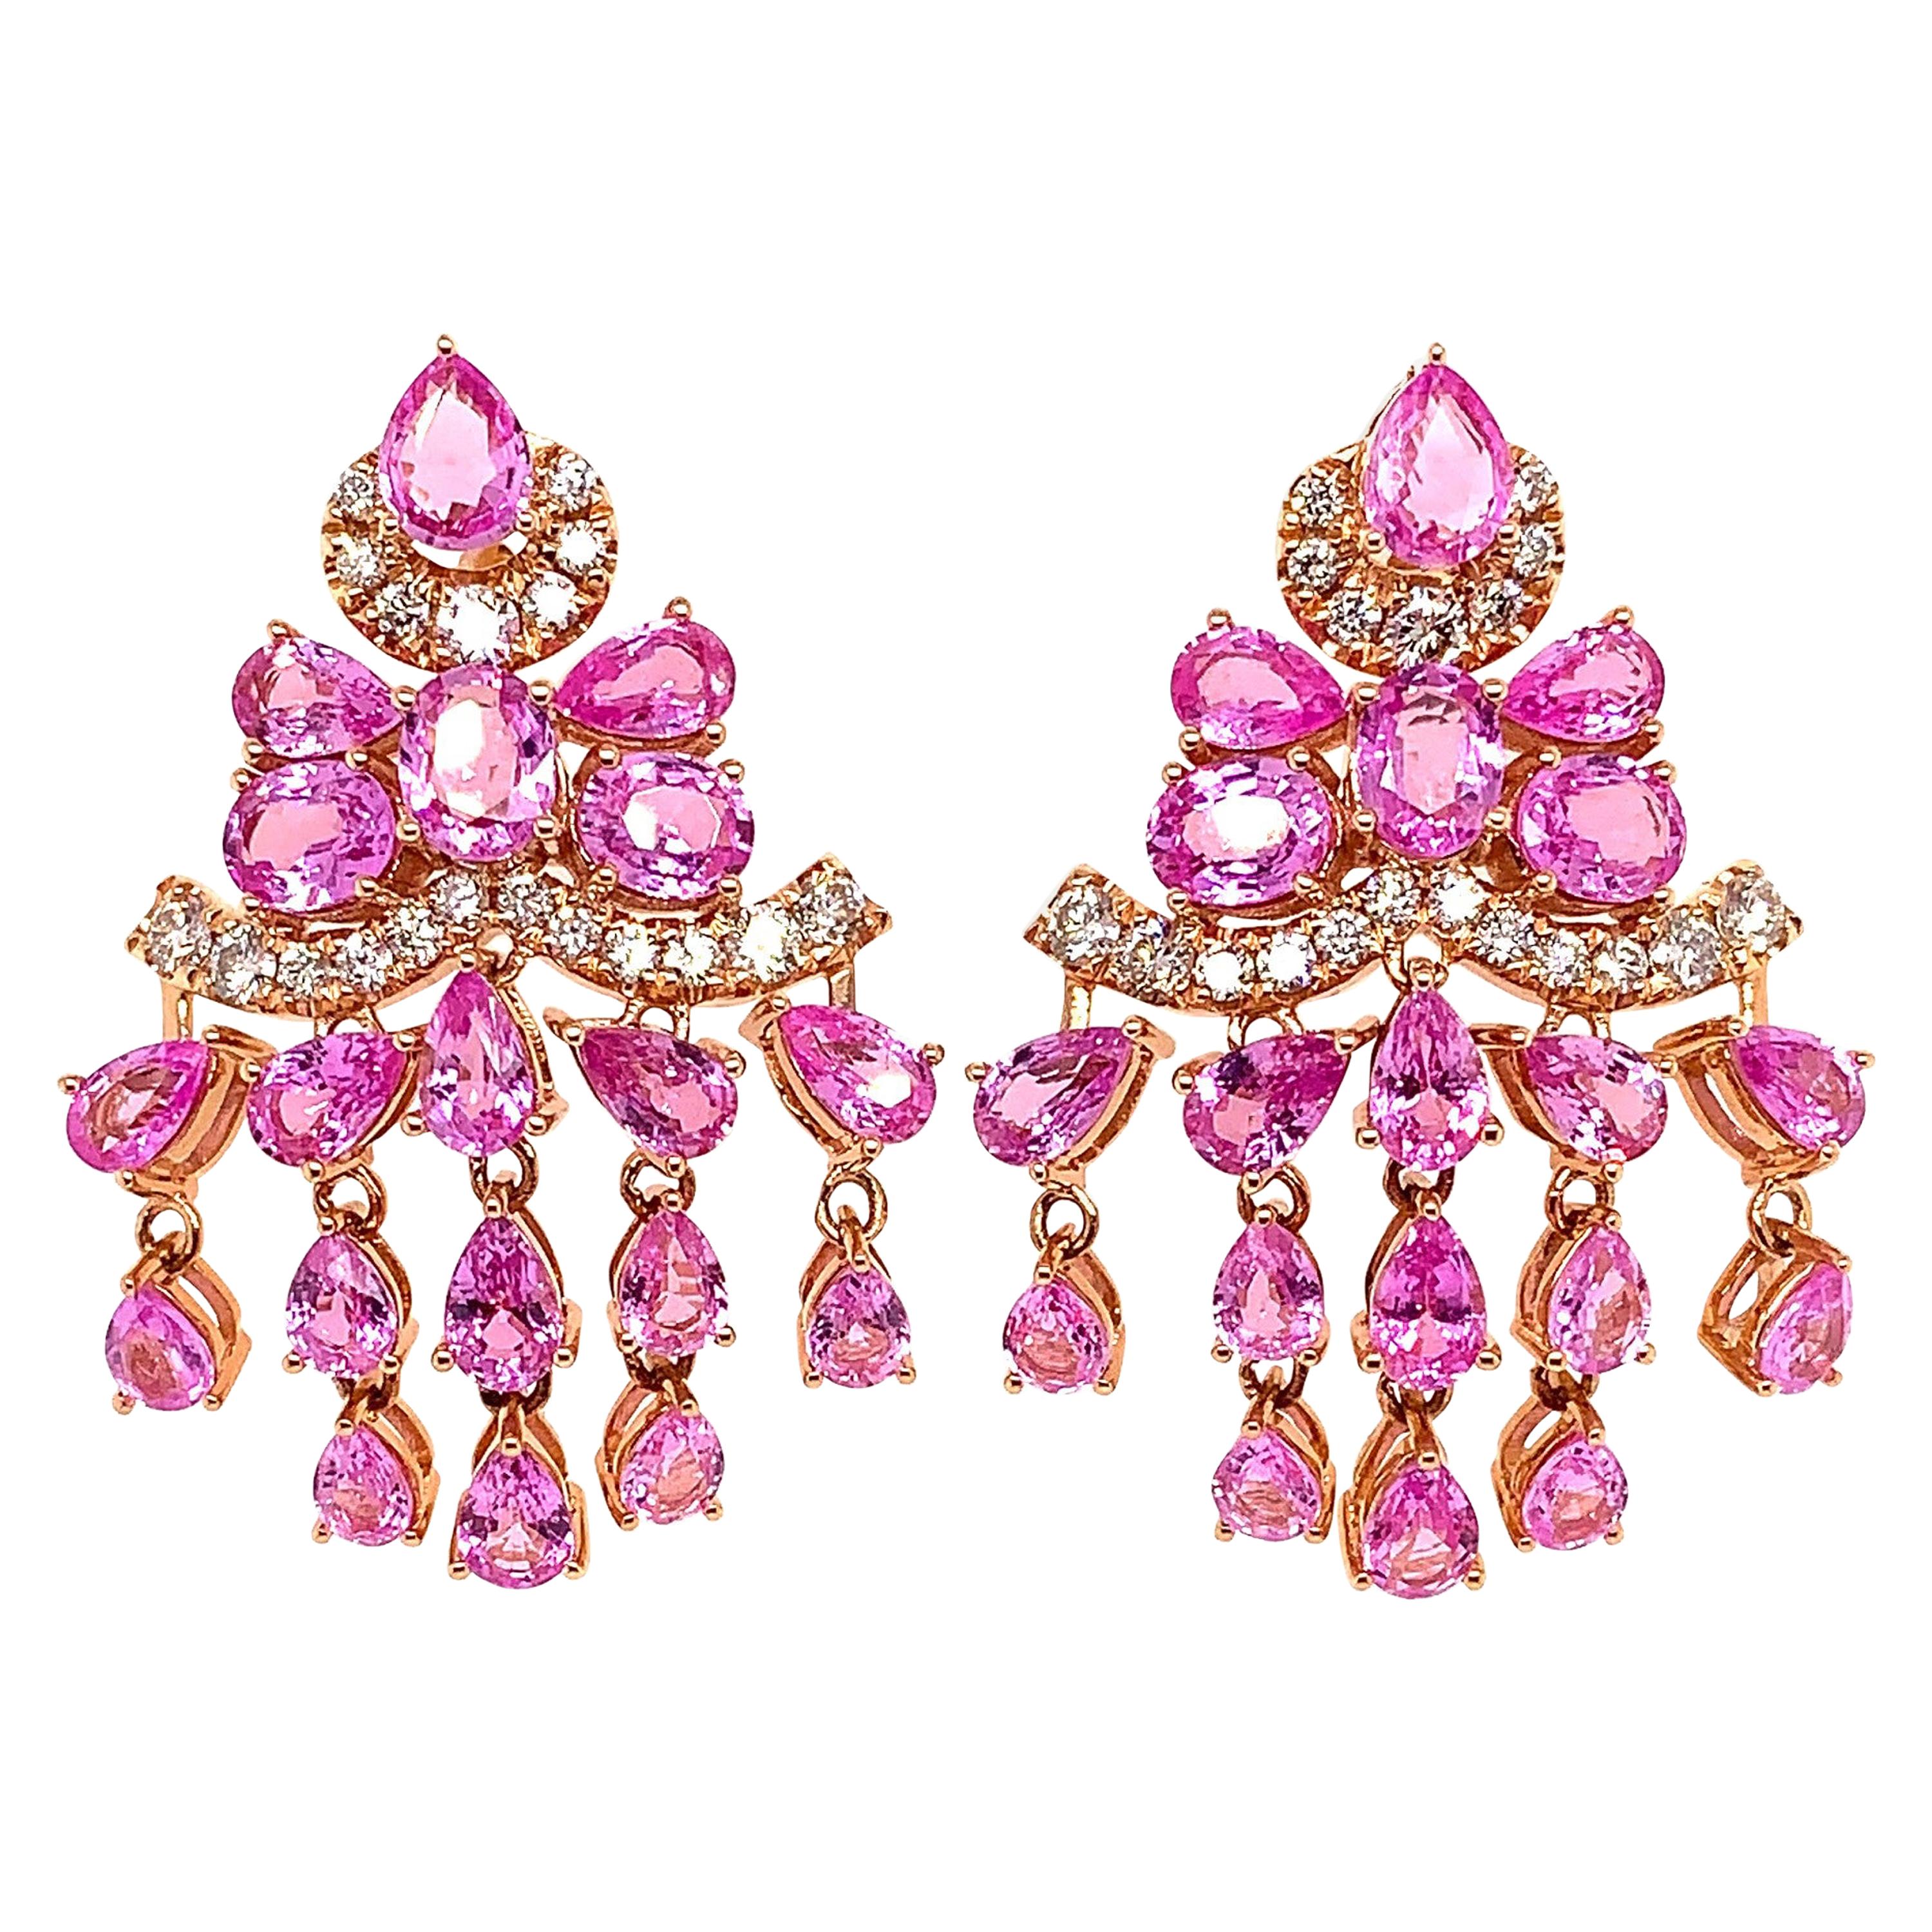 9.725 Carat Pink Sapphire Earring in 18 Karat Rose Gold with Diamonds